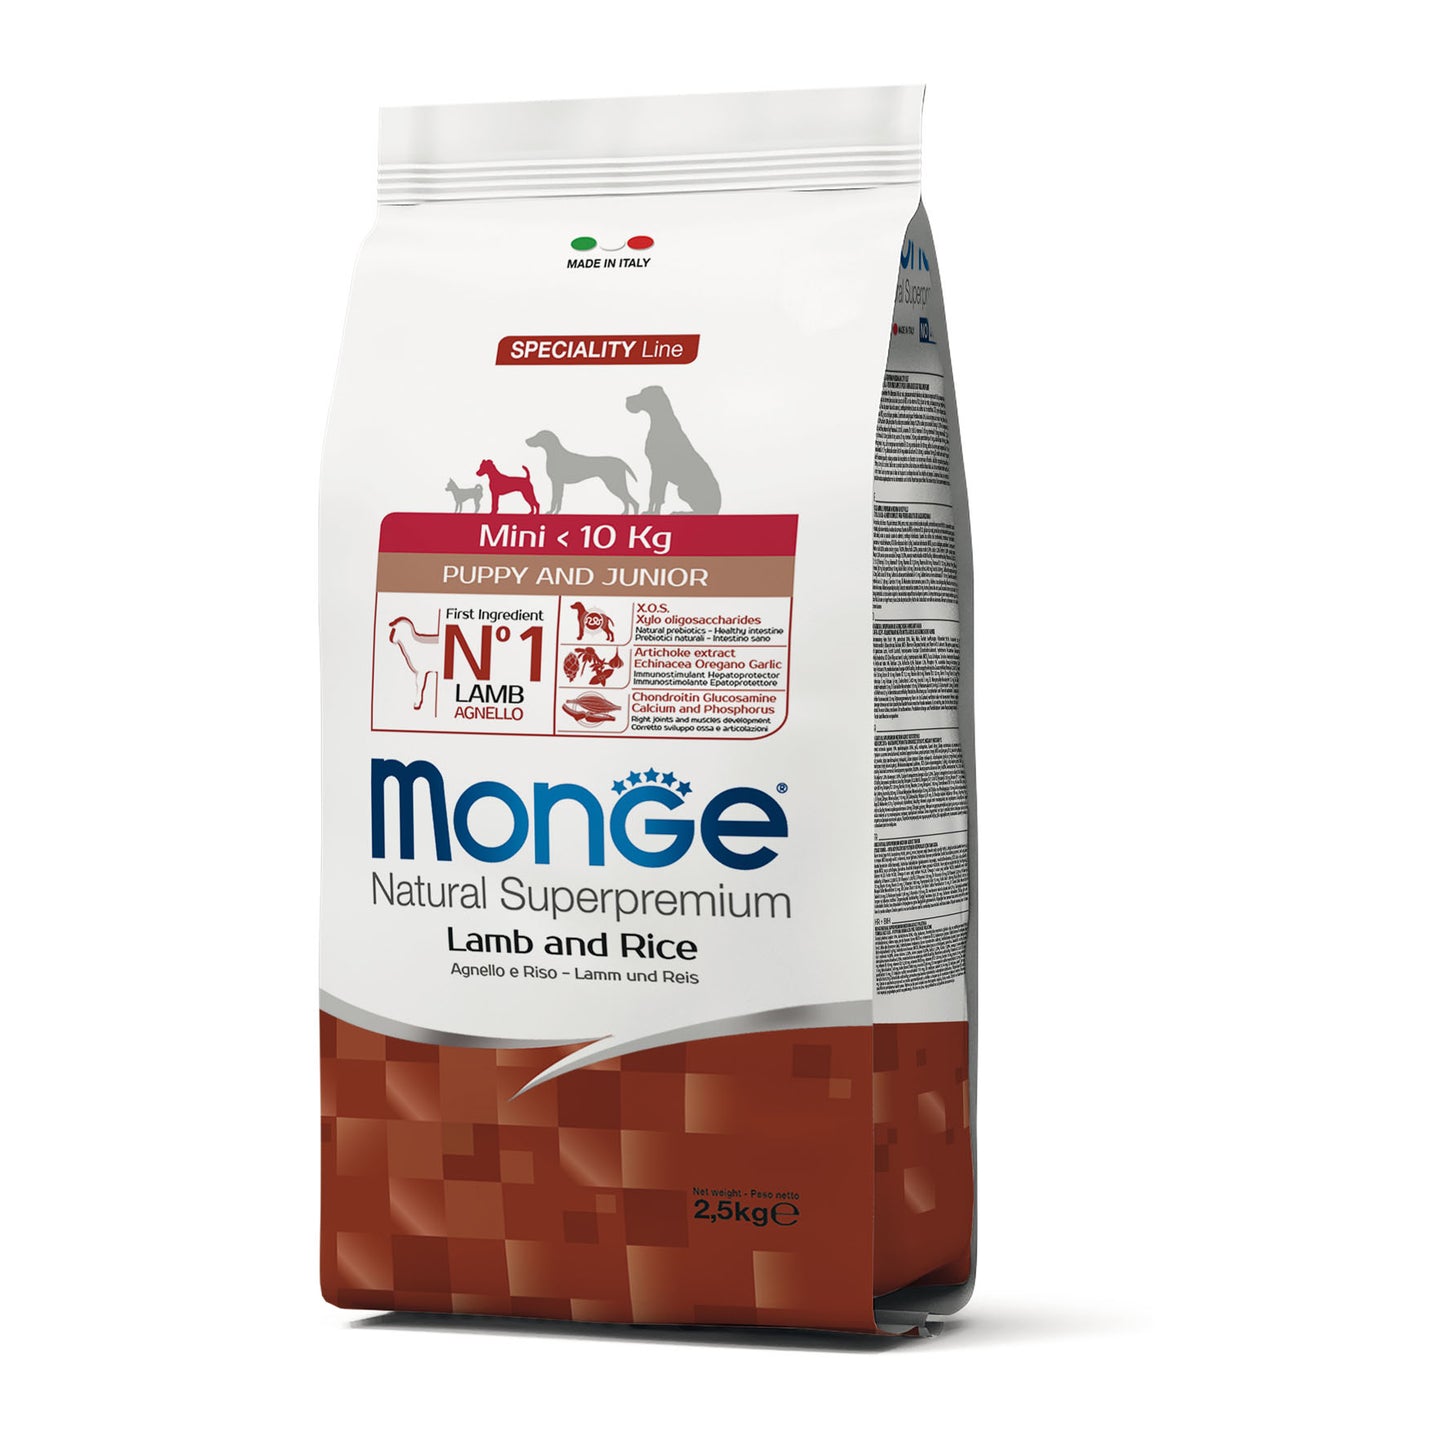 Monge Dog - SPECIALITY Line - Monoprotein - Puppy&Junior Mini Lamb